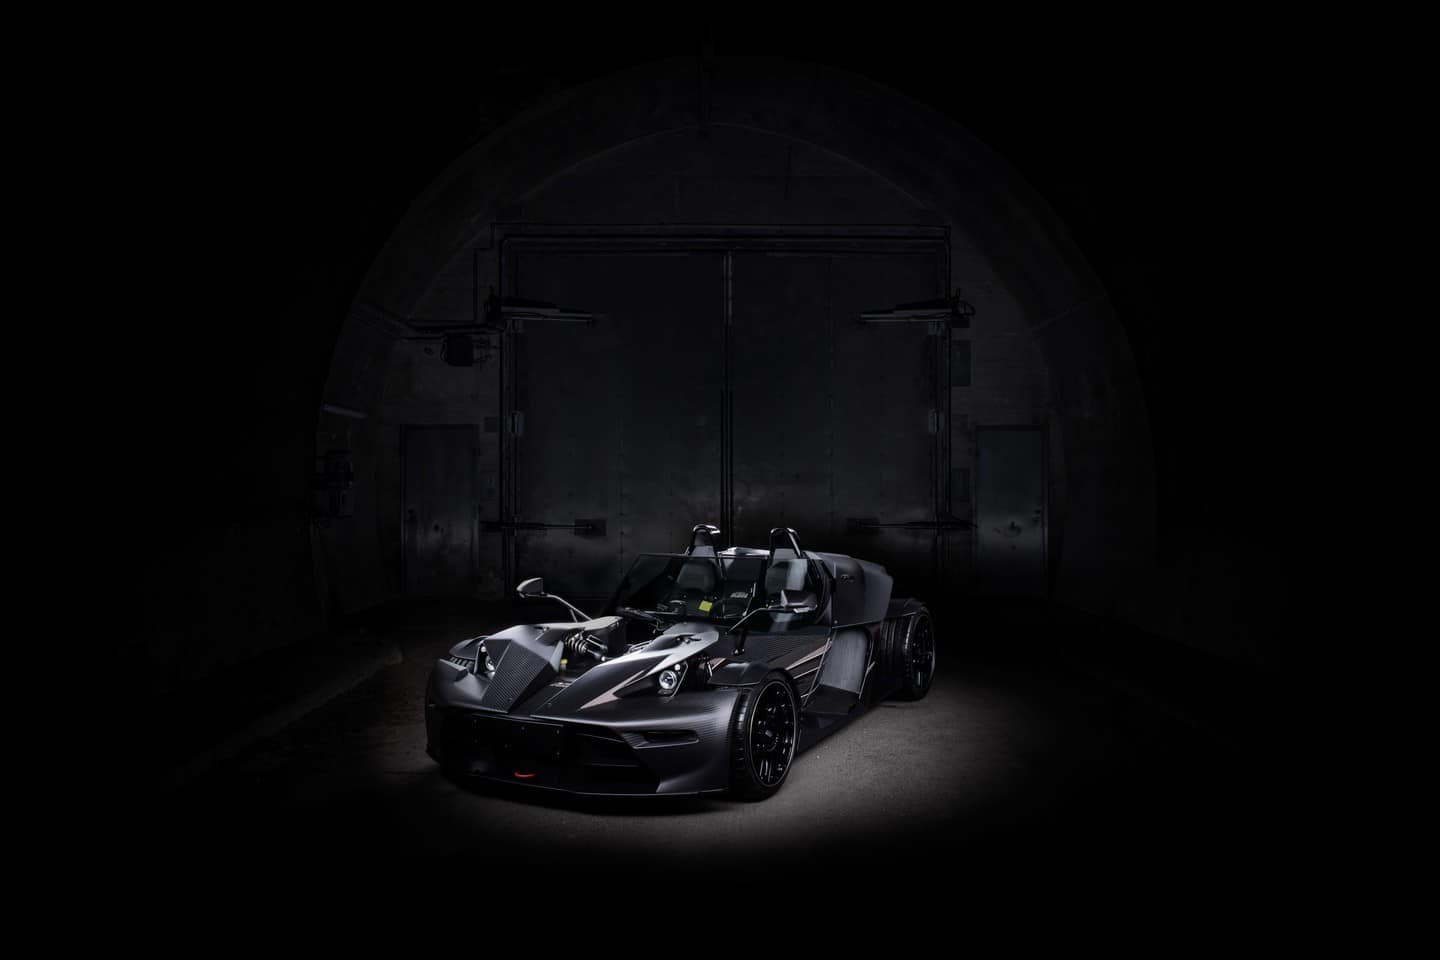 KTM-X-BOW-GT-Black-Edition-Geneva-5